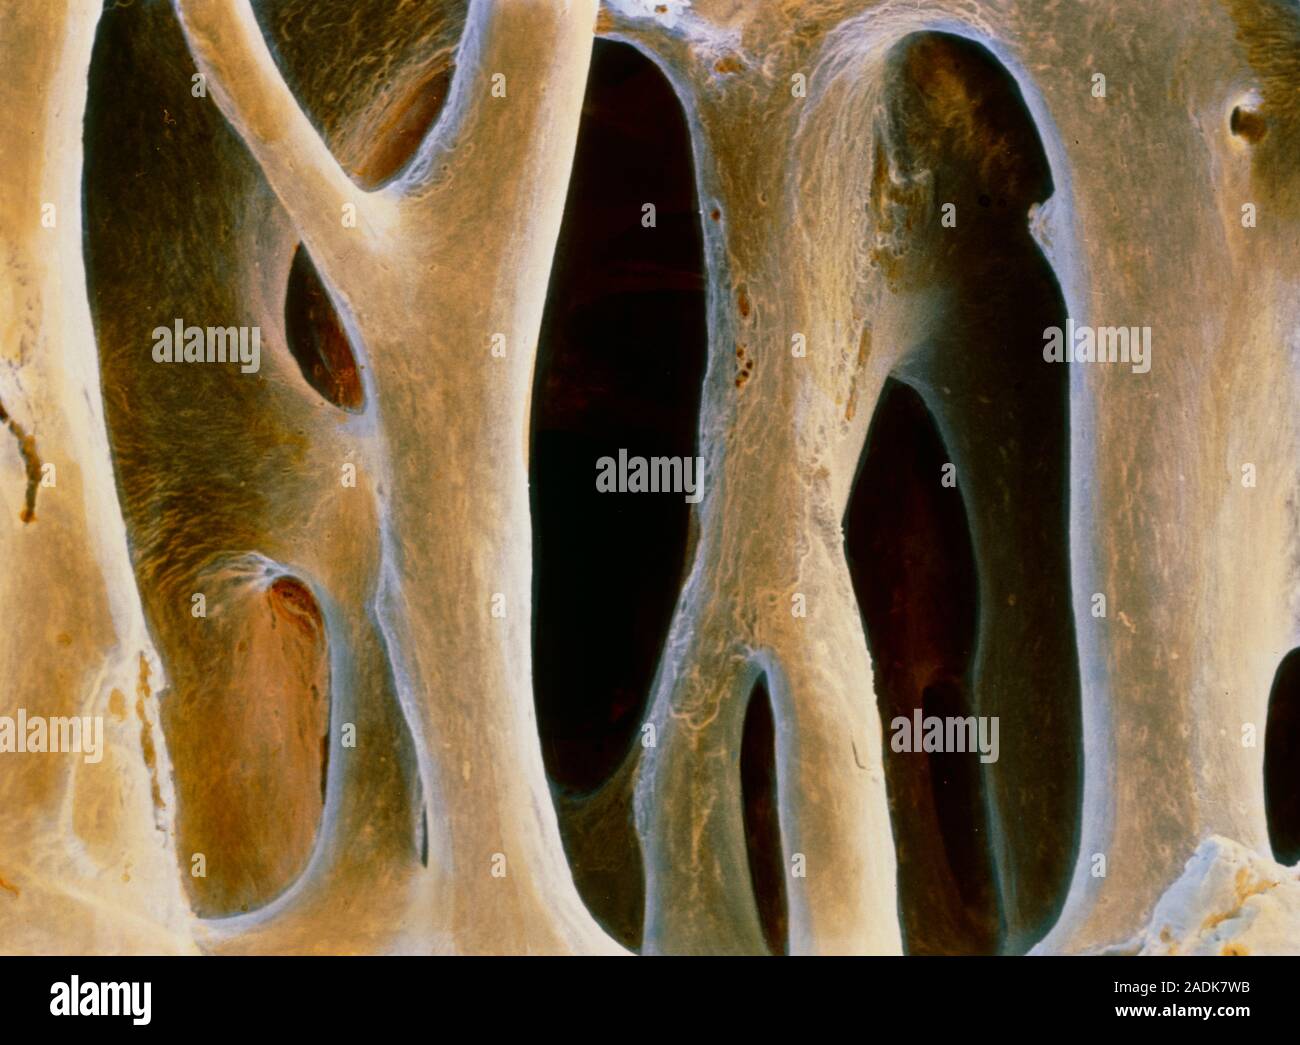 клетка кости фото